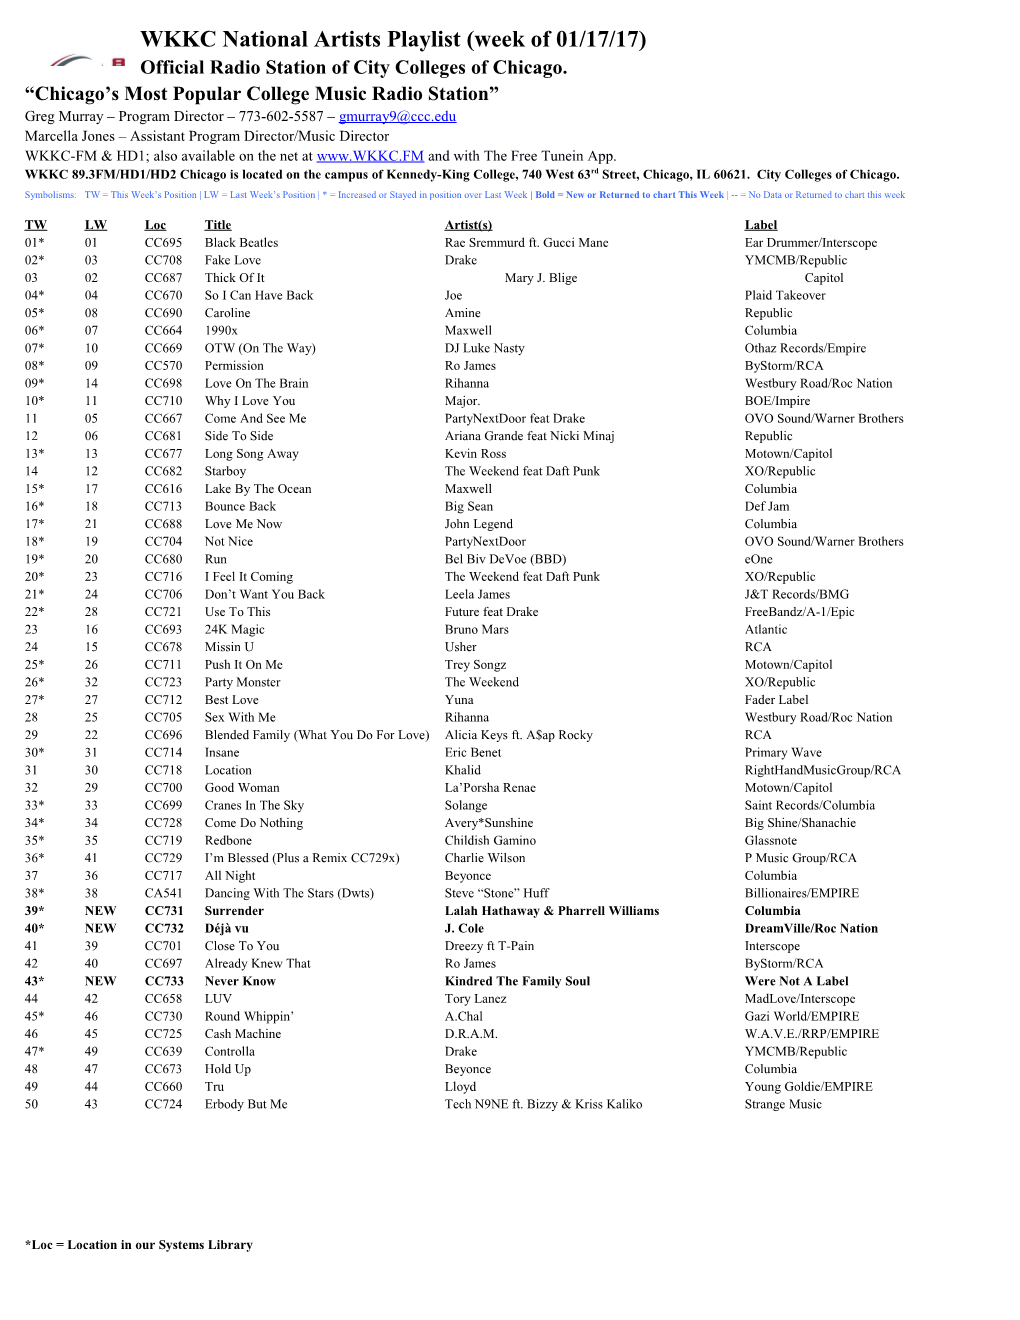 WKKC National Artists Playlist (Week of 02/16/16)